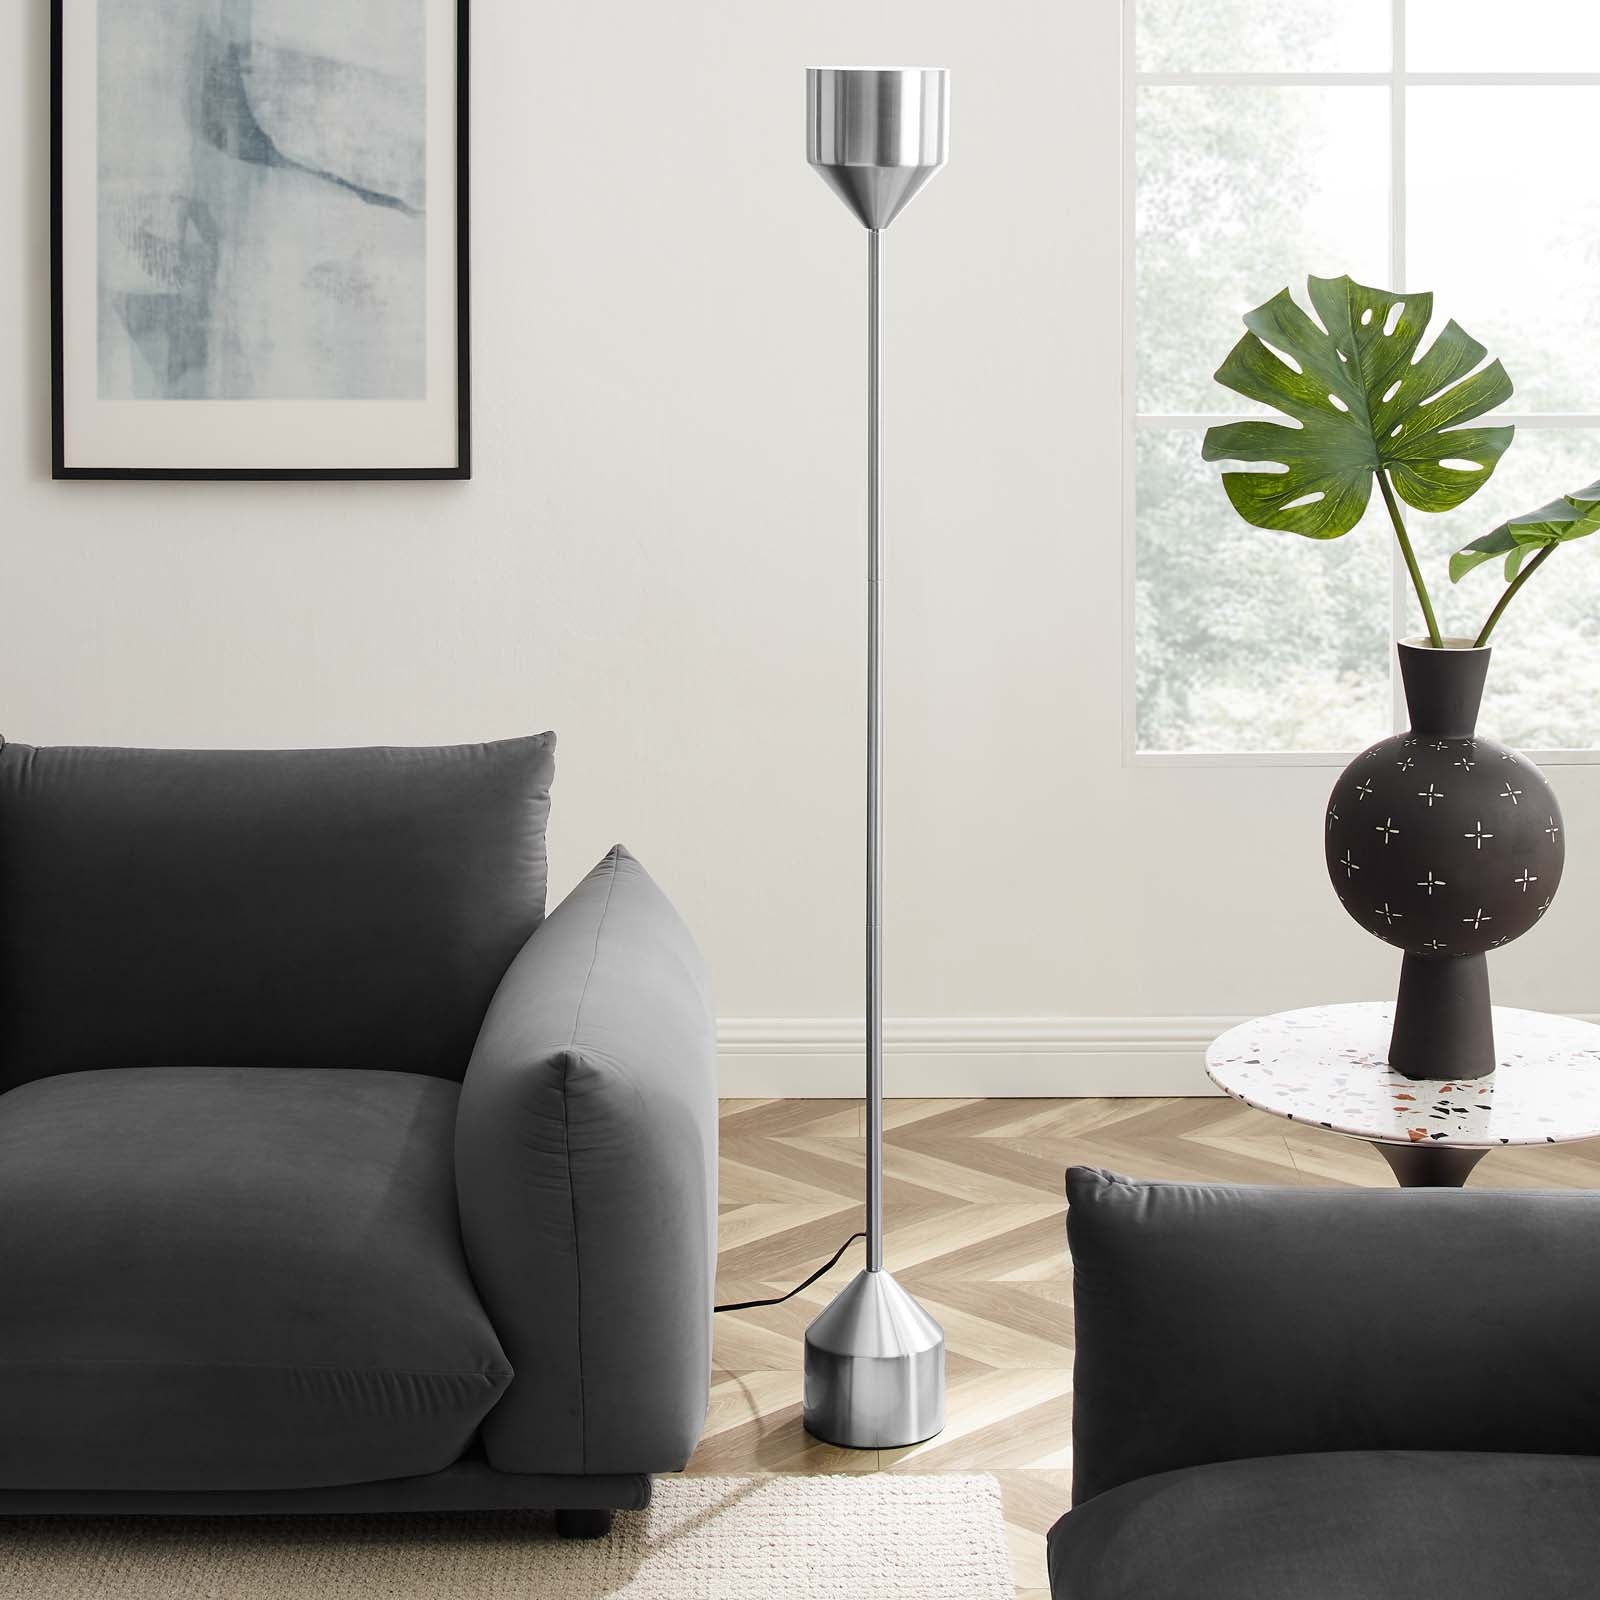 Kara Standing Floor Lamp-Floor Lamp-Modway-Wall2Wall Furnishings